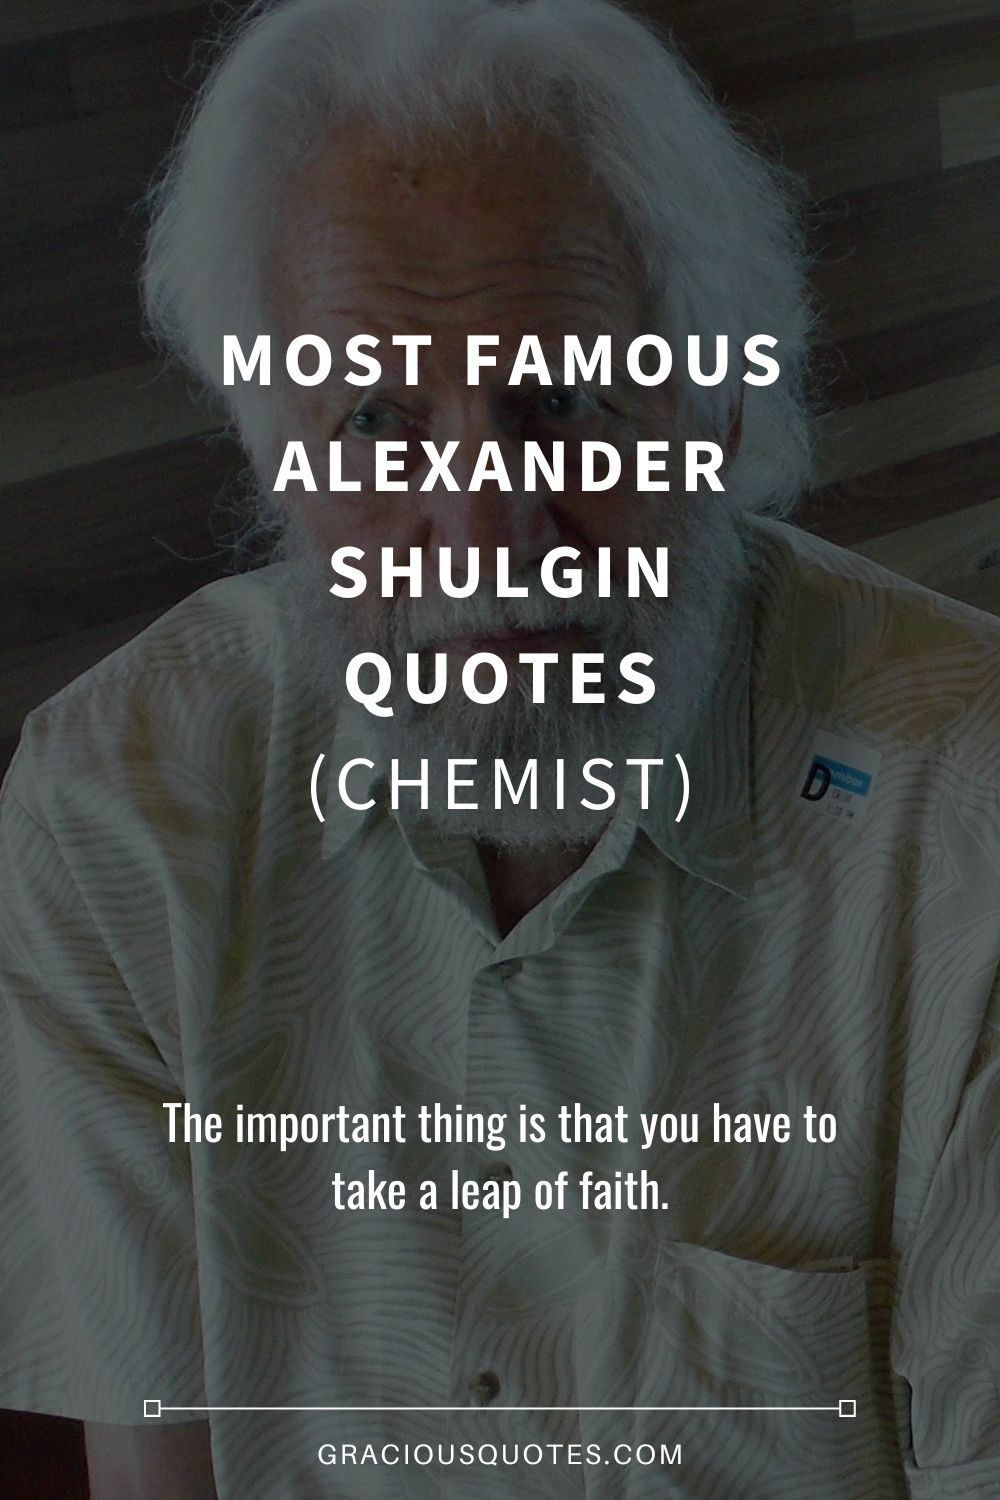 Most Famous Alexander Shulgin Quotes (CHEMIST) - Gracious Quotes